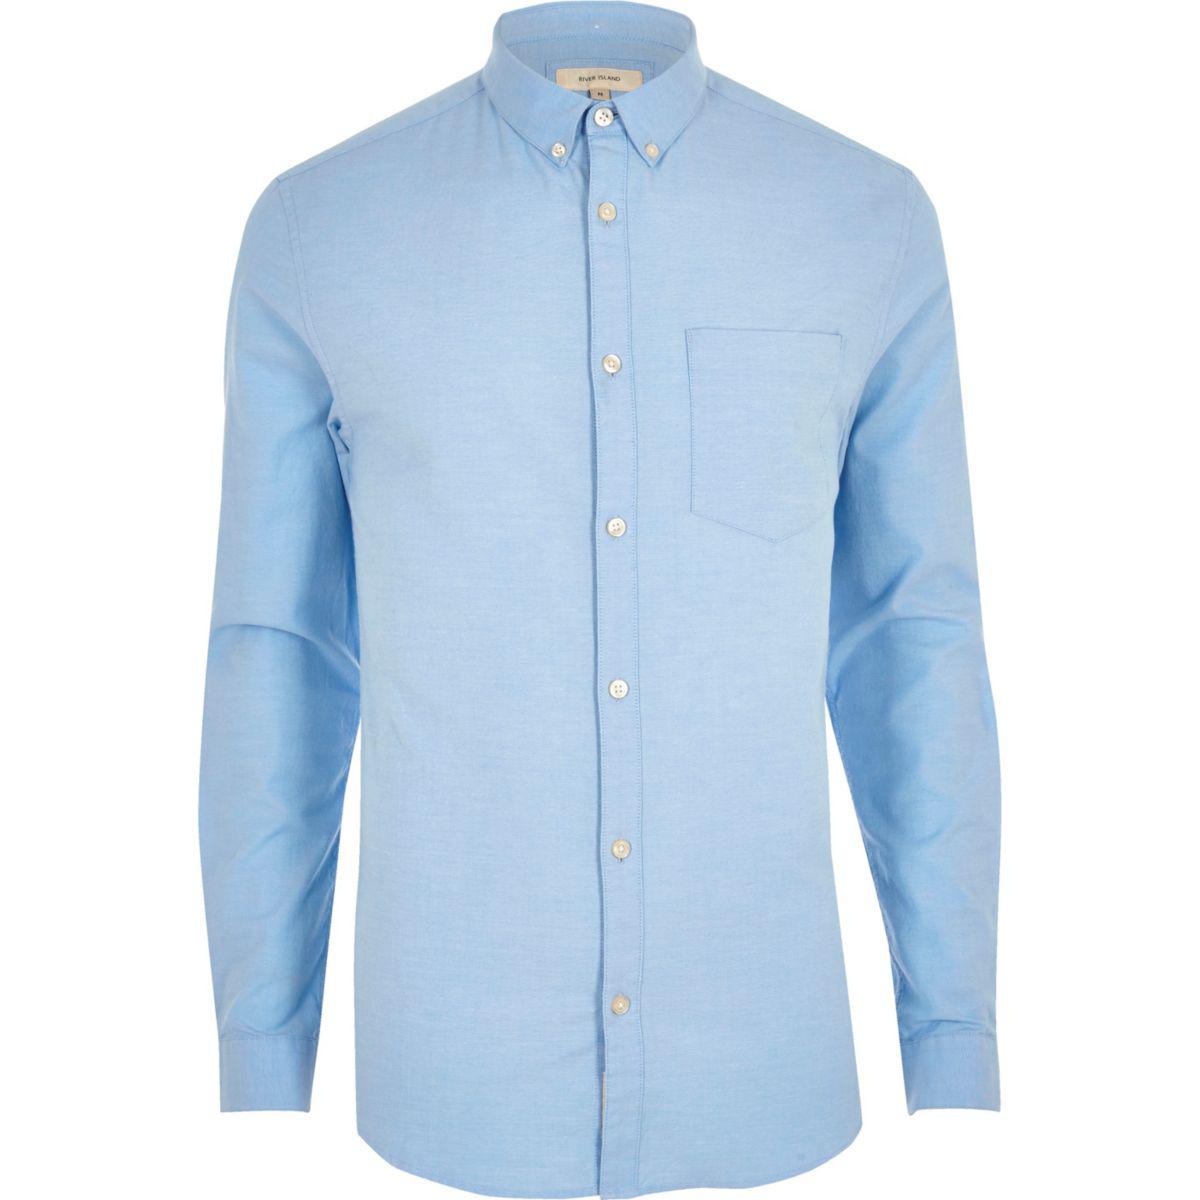 Blue oxford shirt